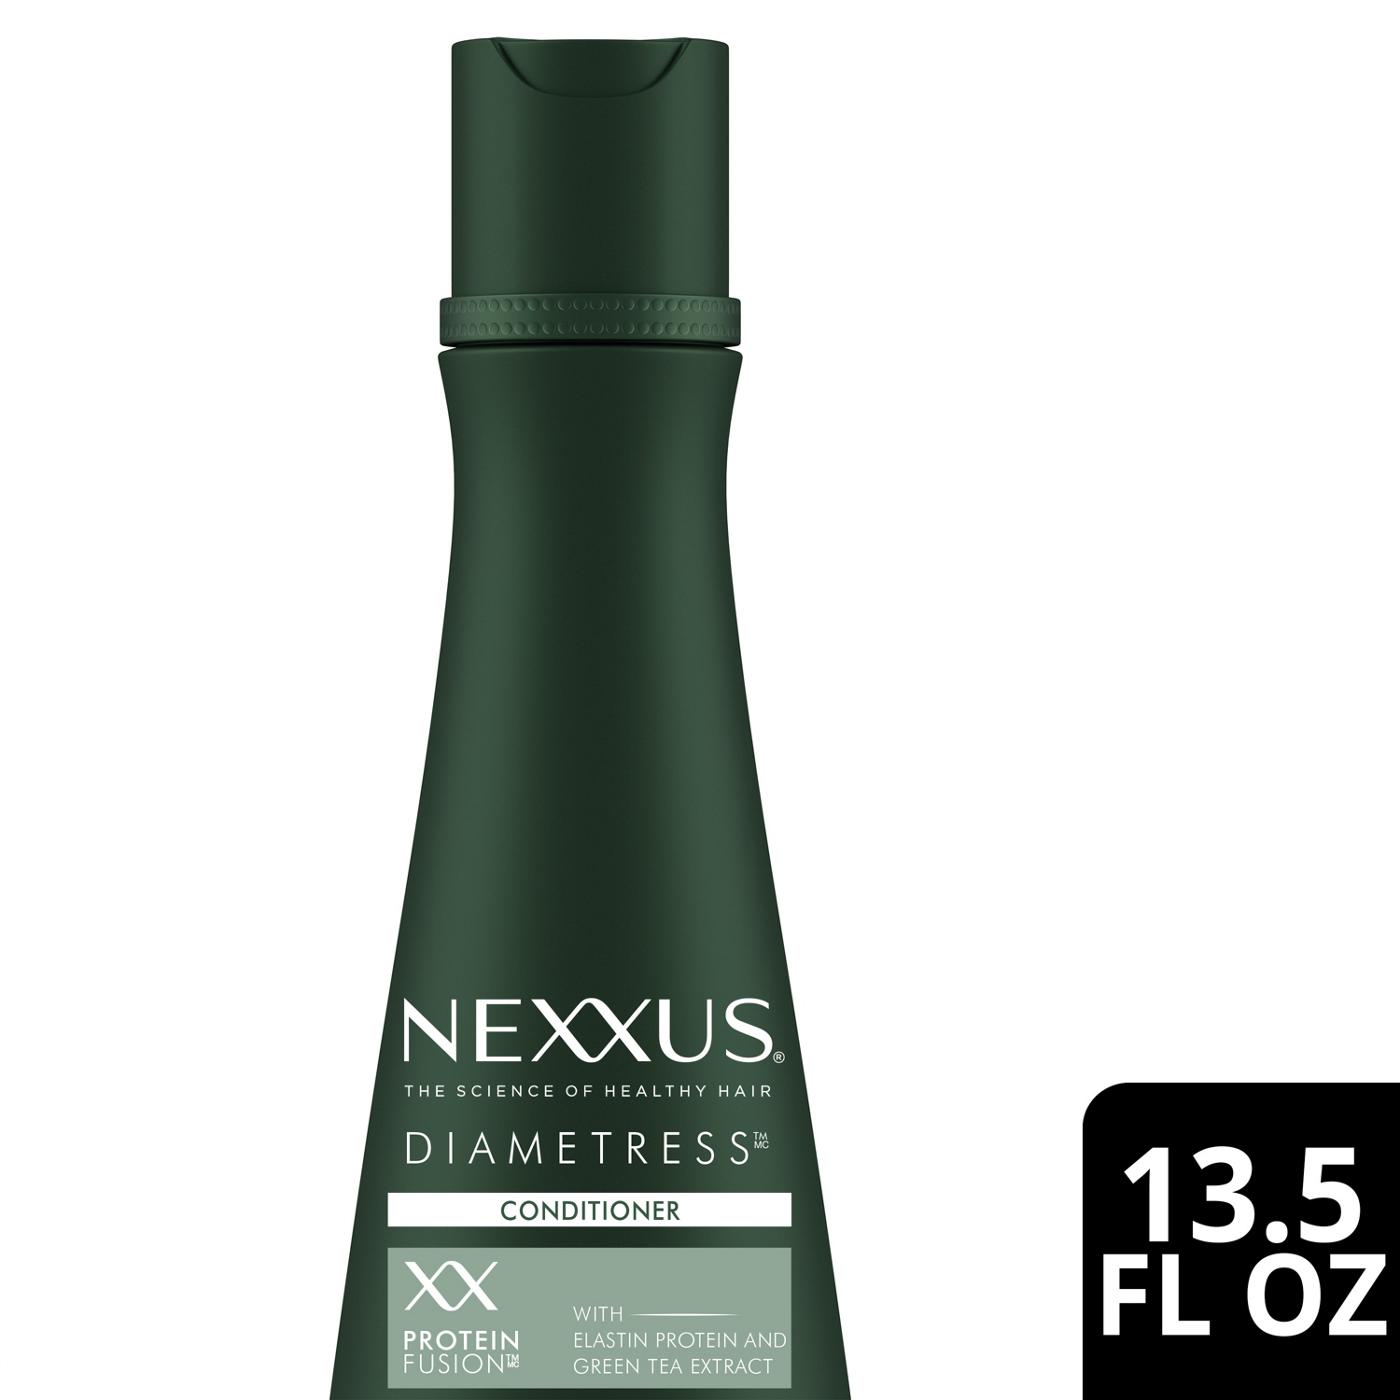 Nexxus Diametress Volume Conditioner; image 2 of 3